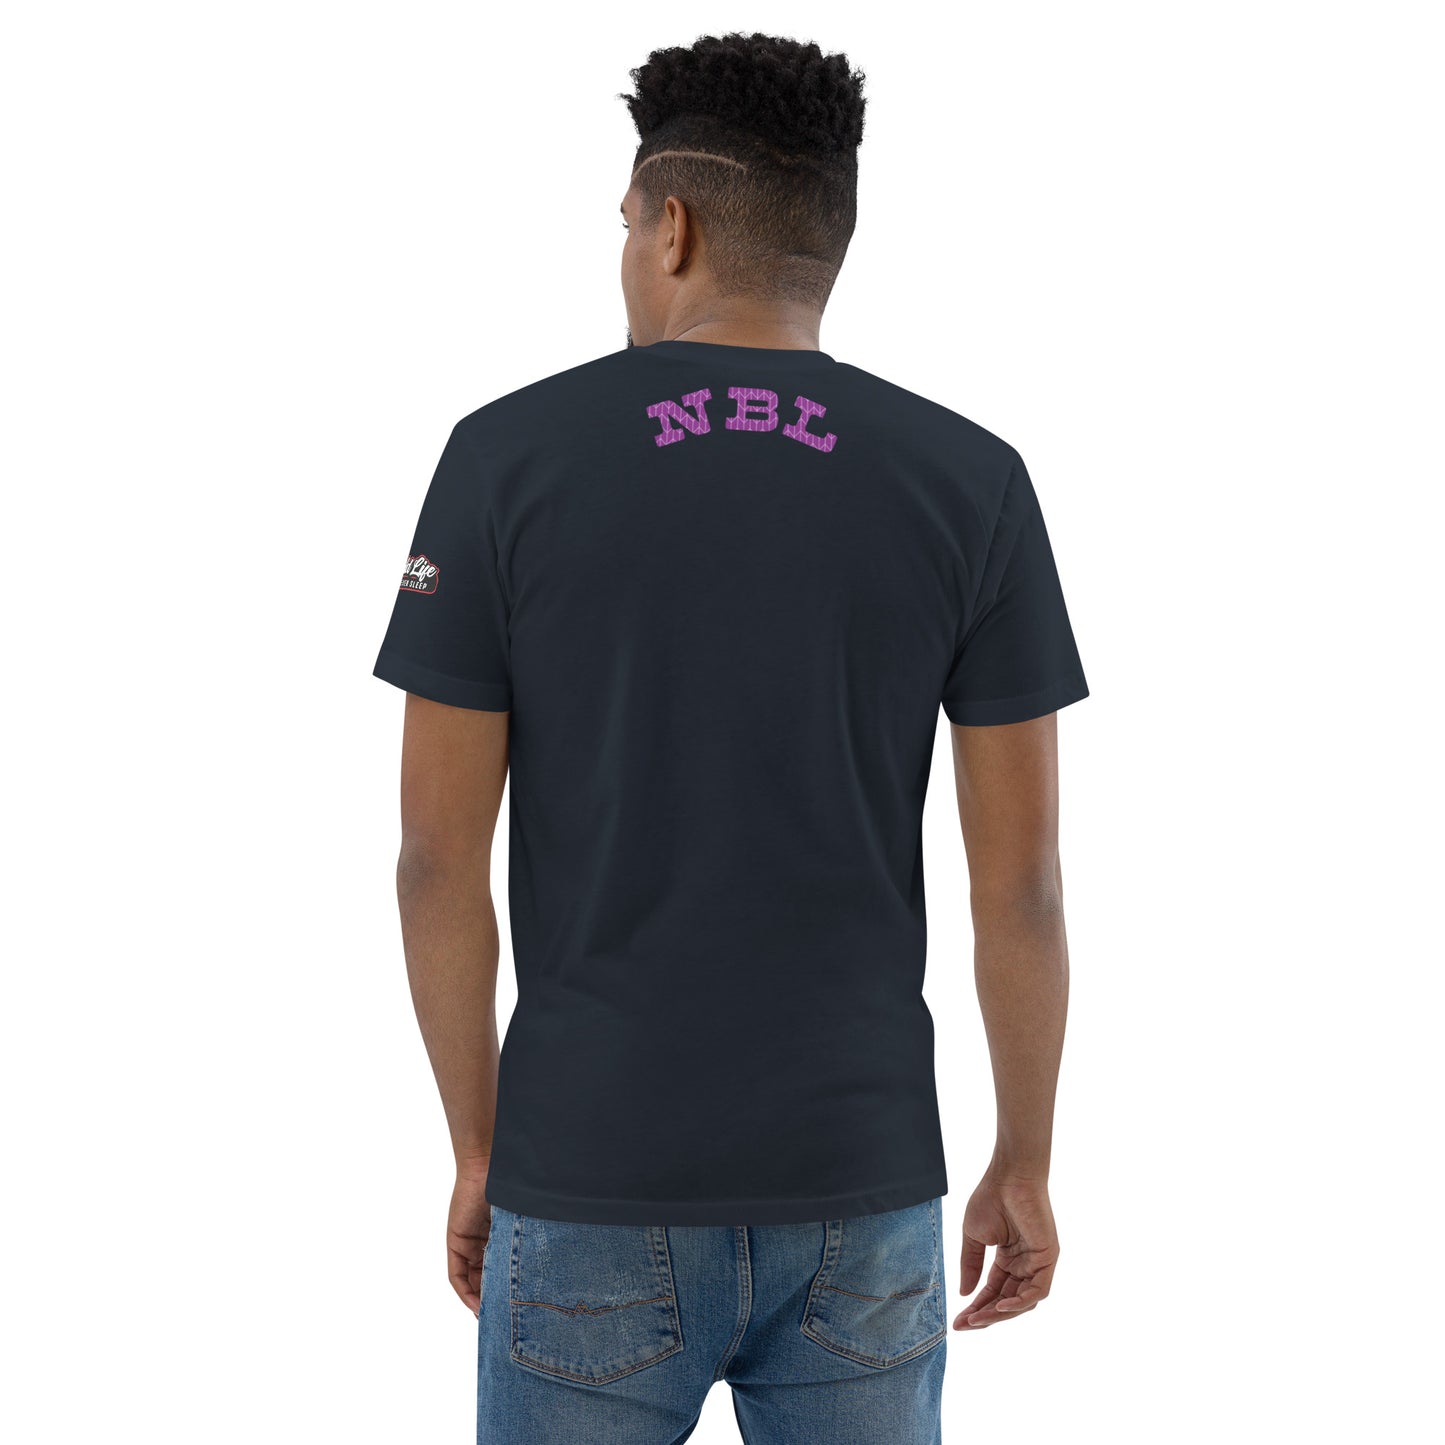 NBL Short Sleeve T-shirt - Men's Clothing